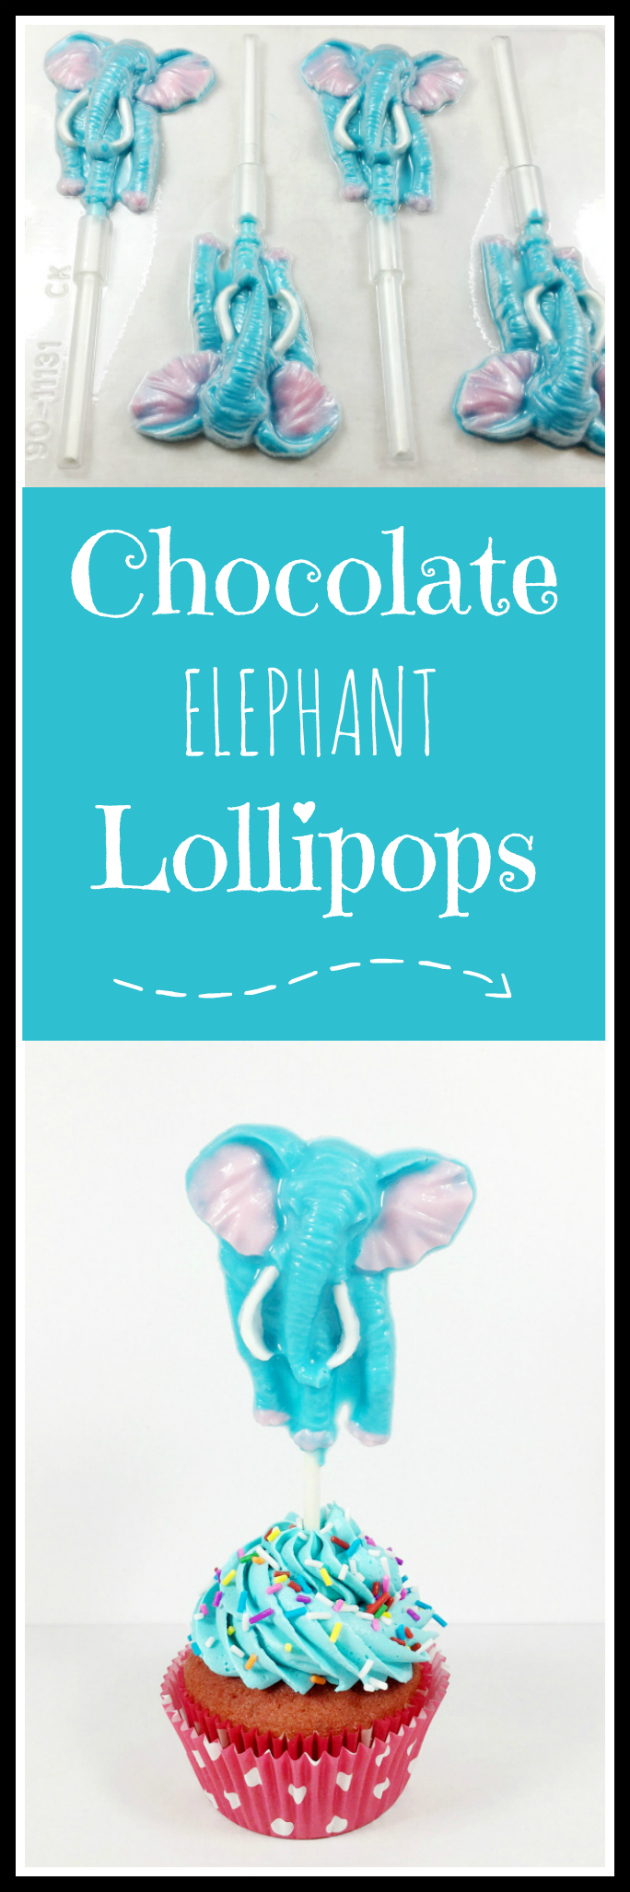 Chocolate Elephant Lollipops Tutorial